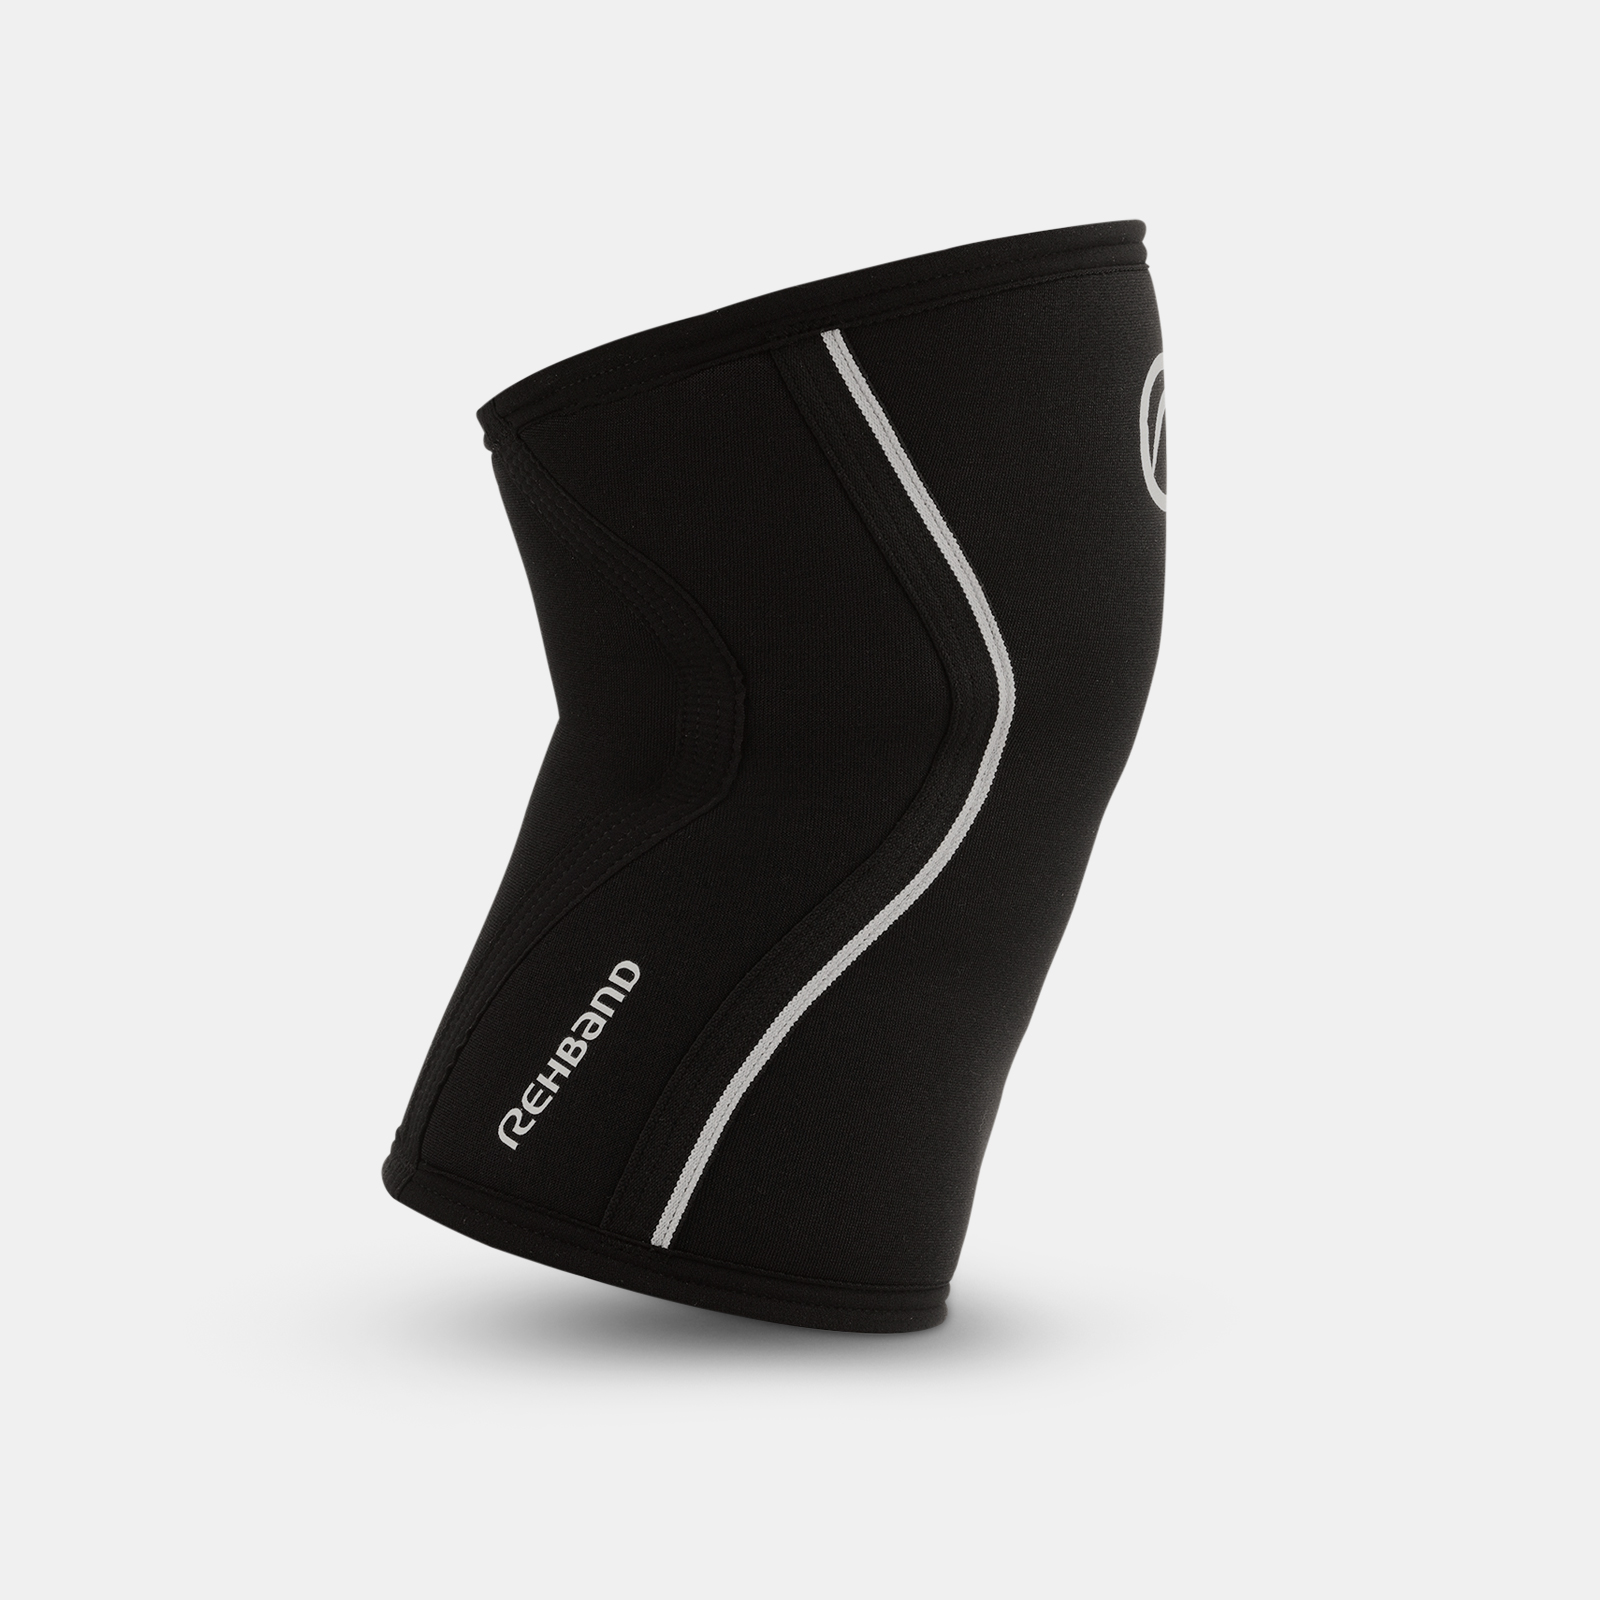 Rehband RX Knee Sleeve - 5mm Black/White image